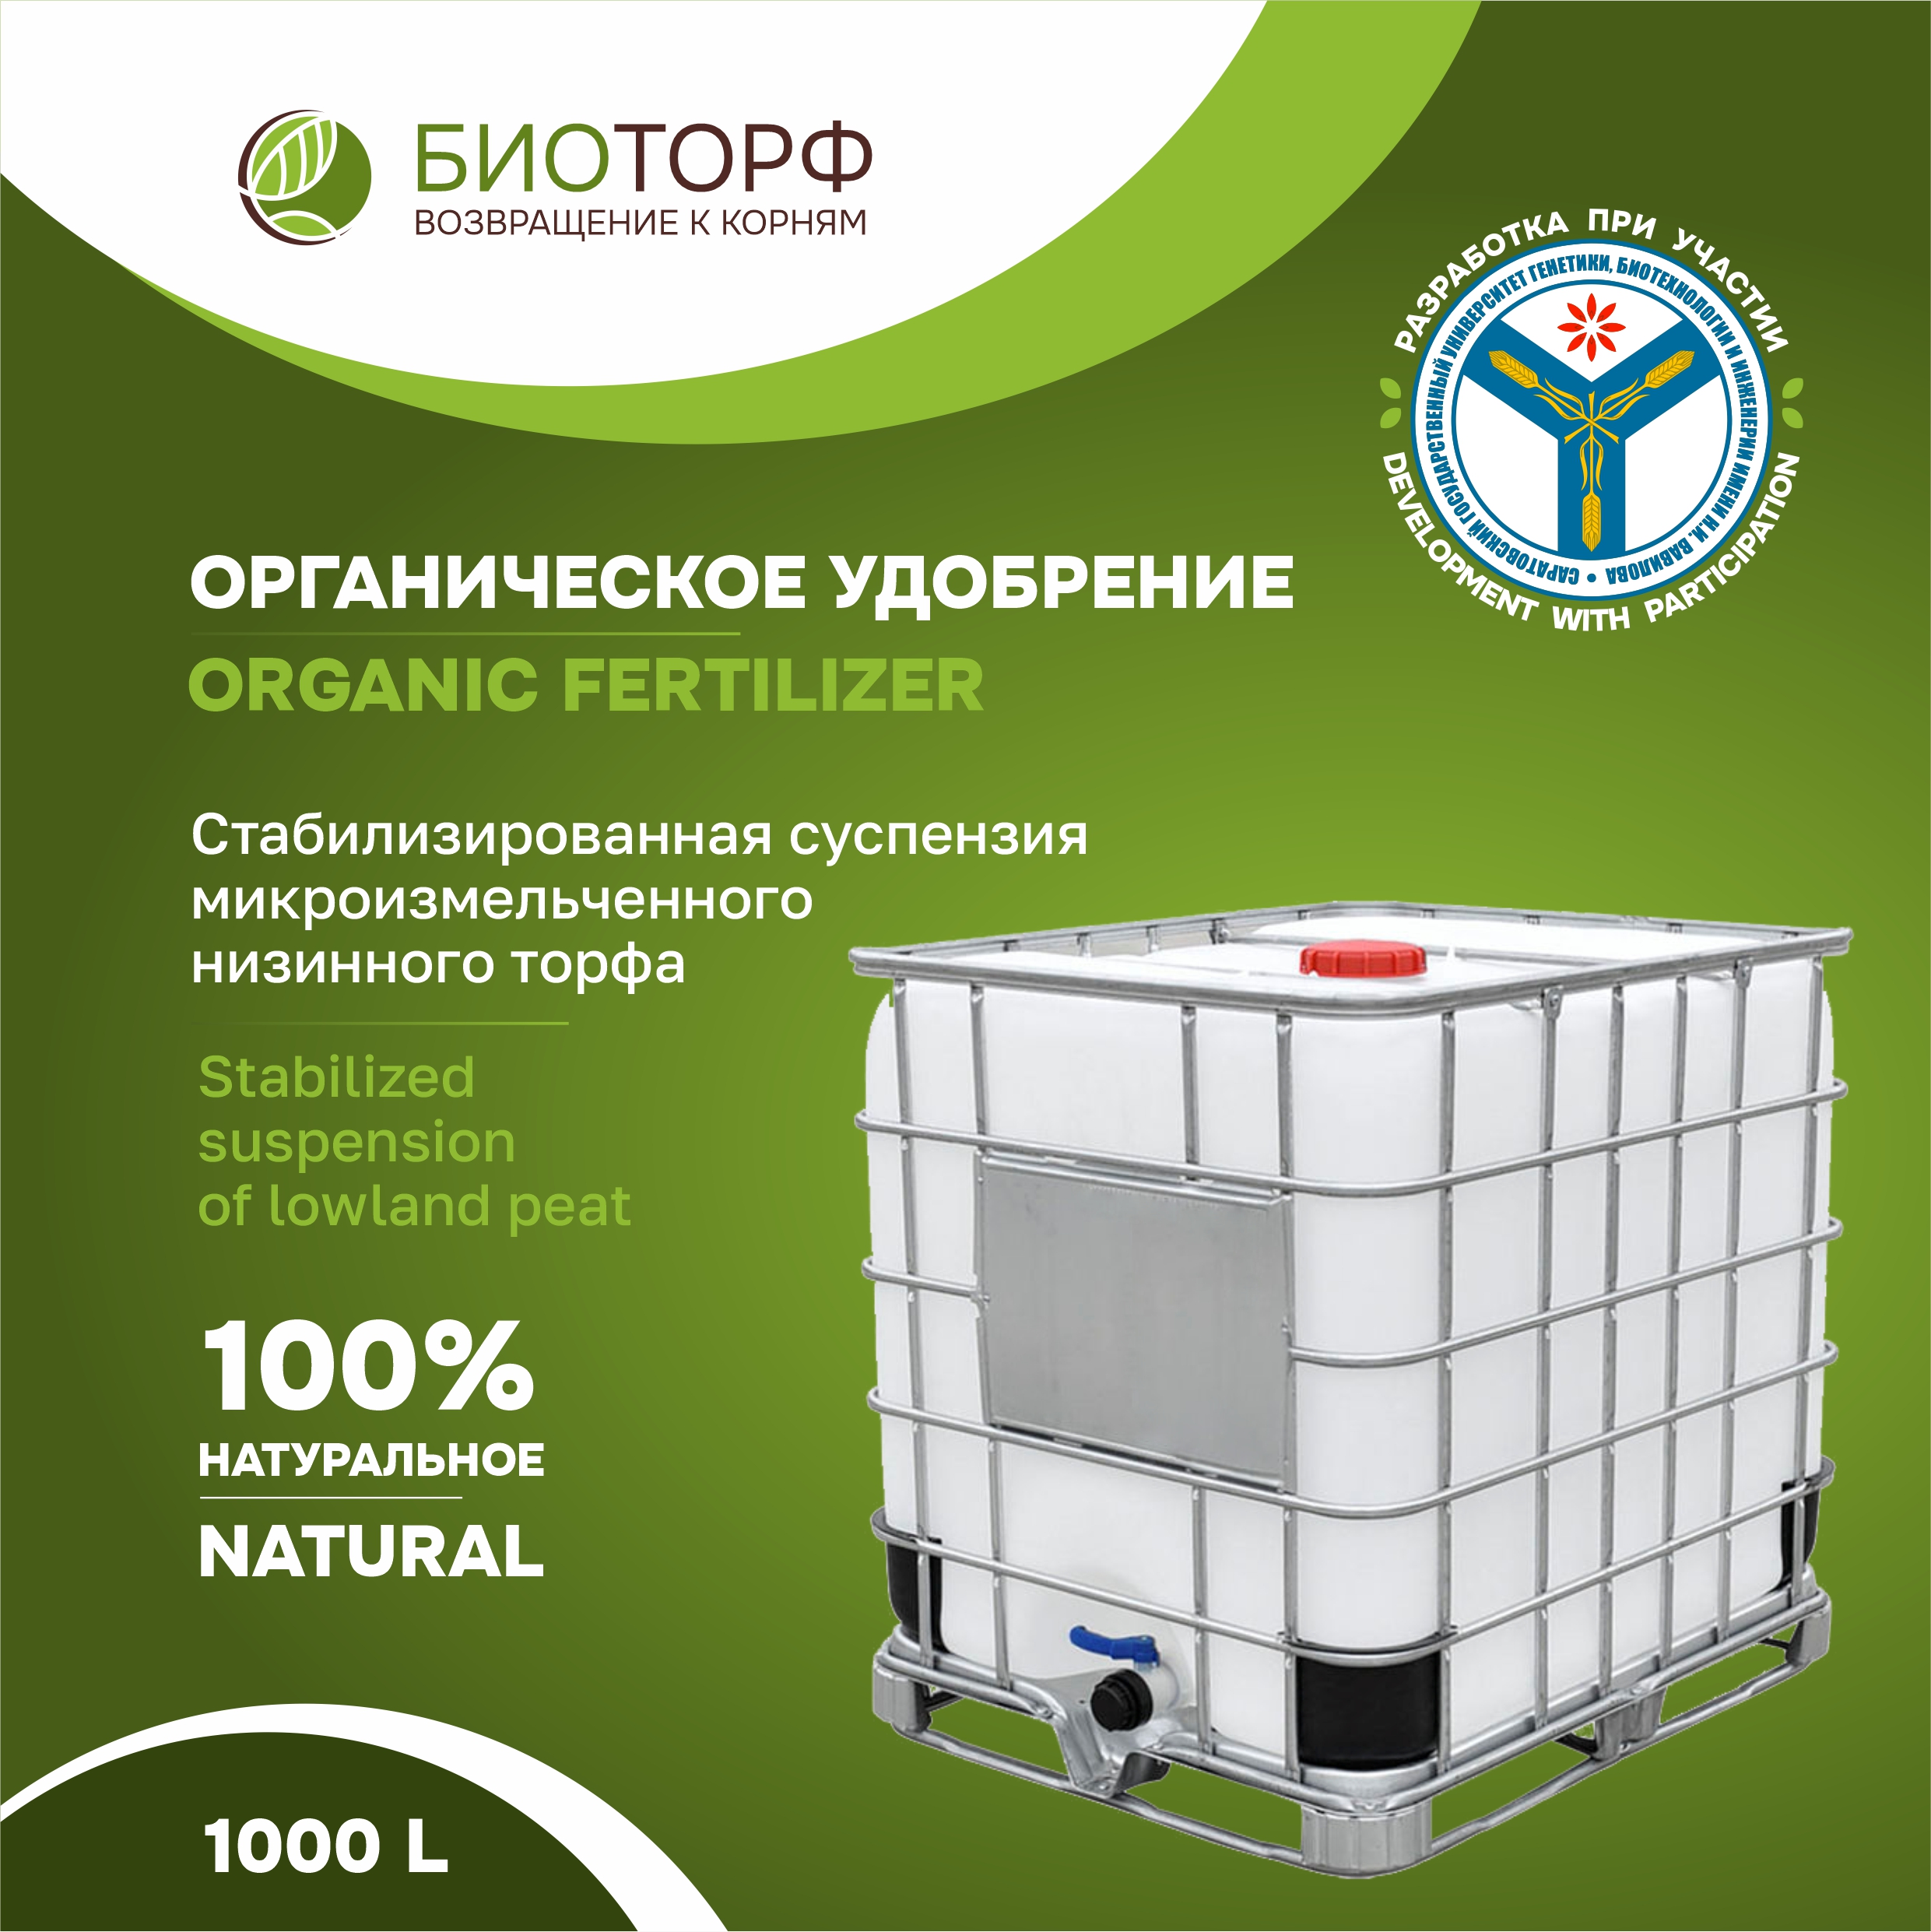 Biotorf, organic pasty fertilizer, 1000l